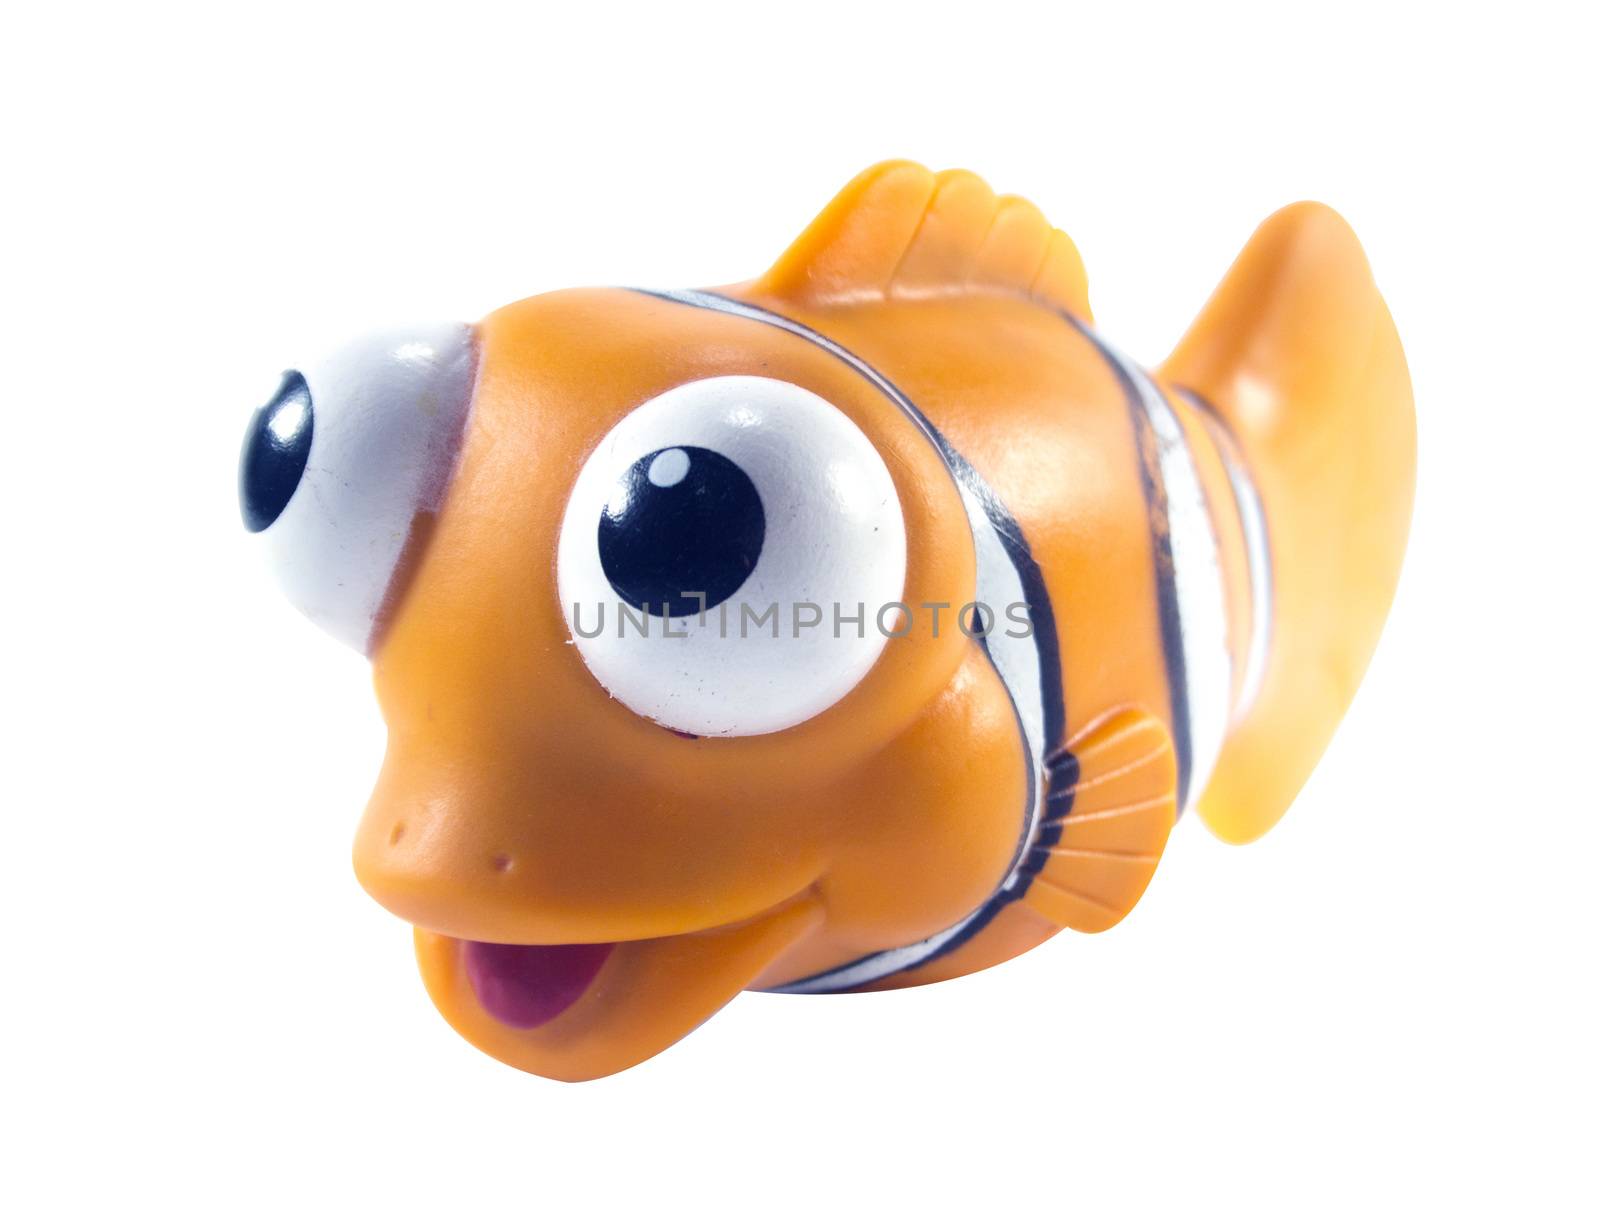 Amman, Jordan - November 1, 2014: Marlin cartoon fish toy character of Finding Nemo movie from Disney Pixar animation studio.